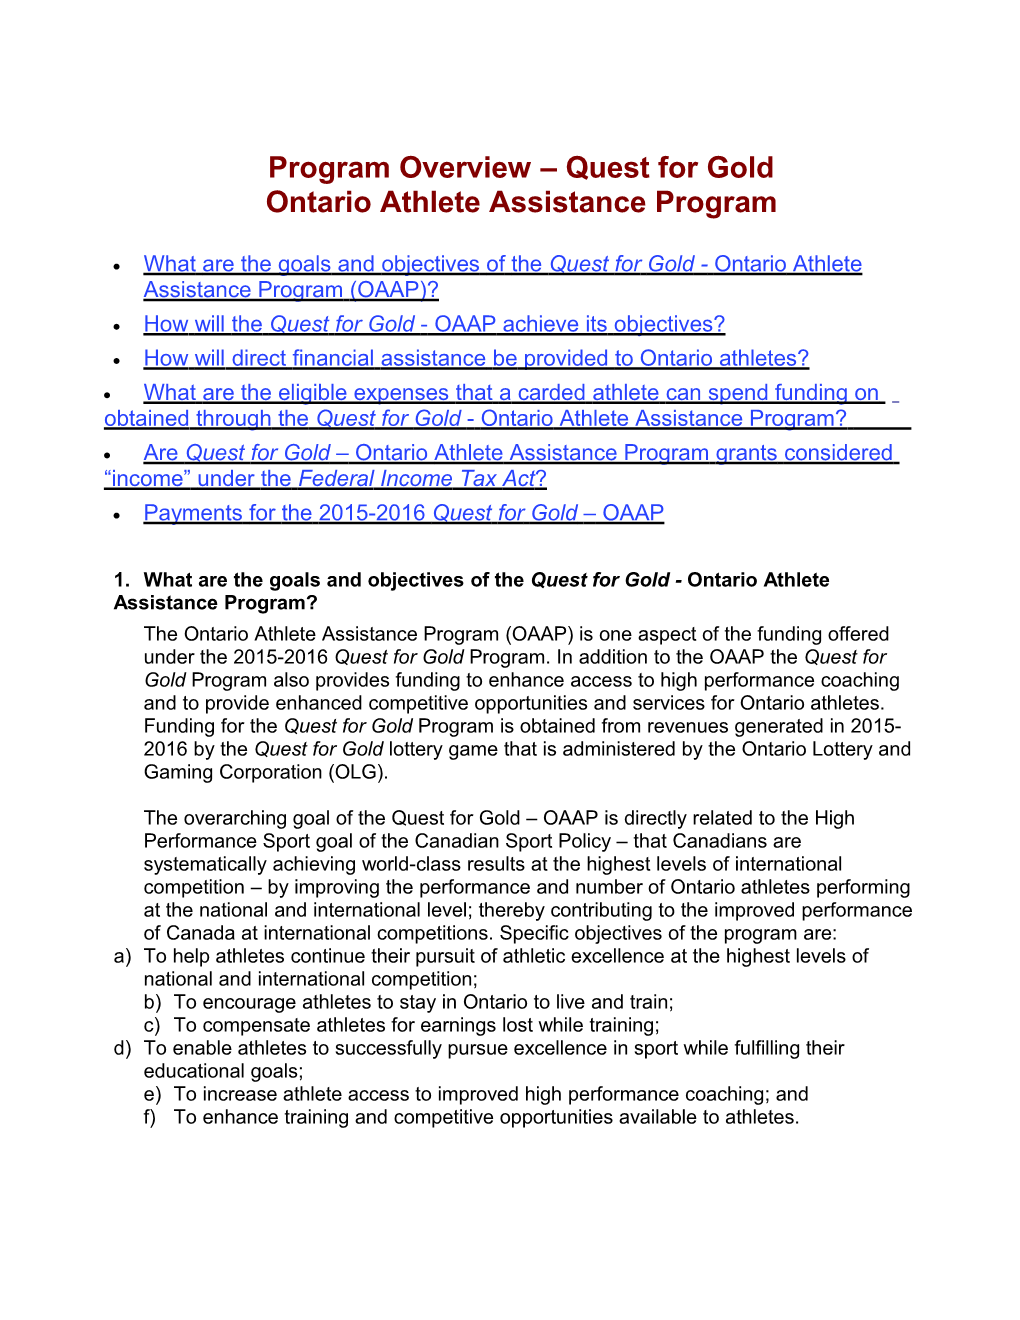 Programoverview Quest for Goldontarioathleteassistance Program